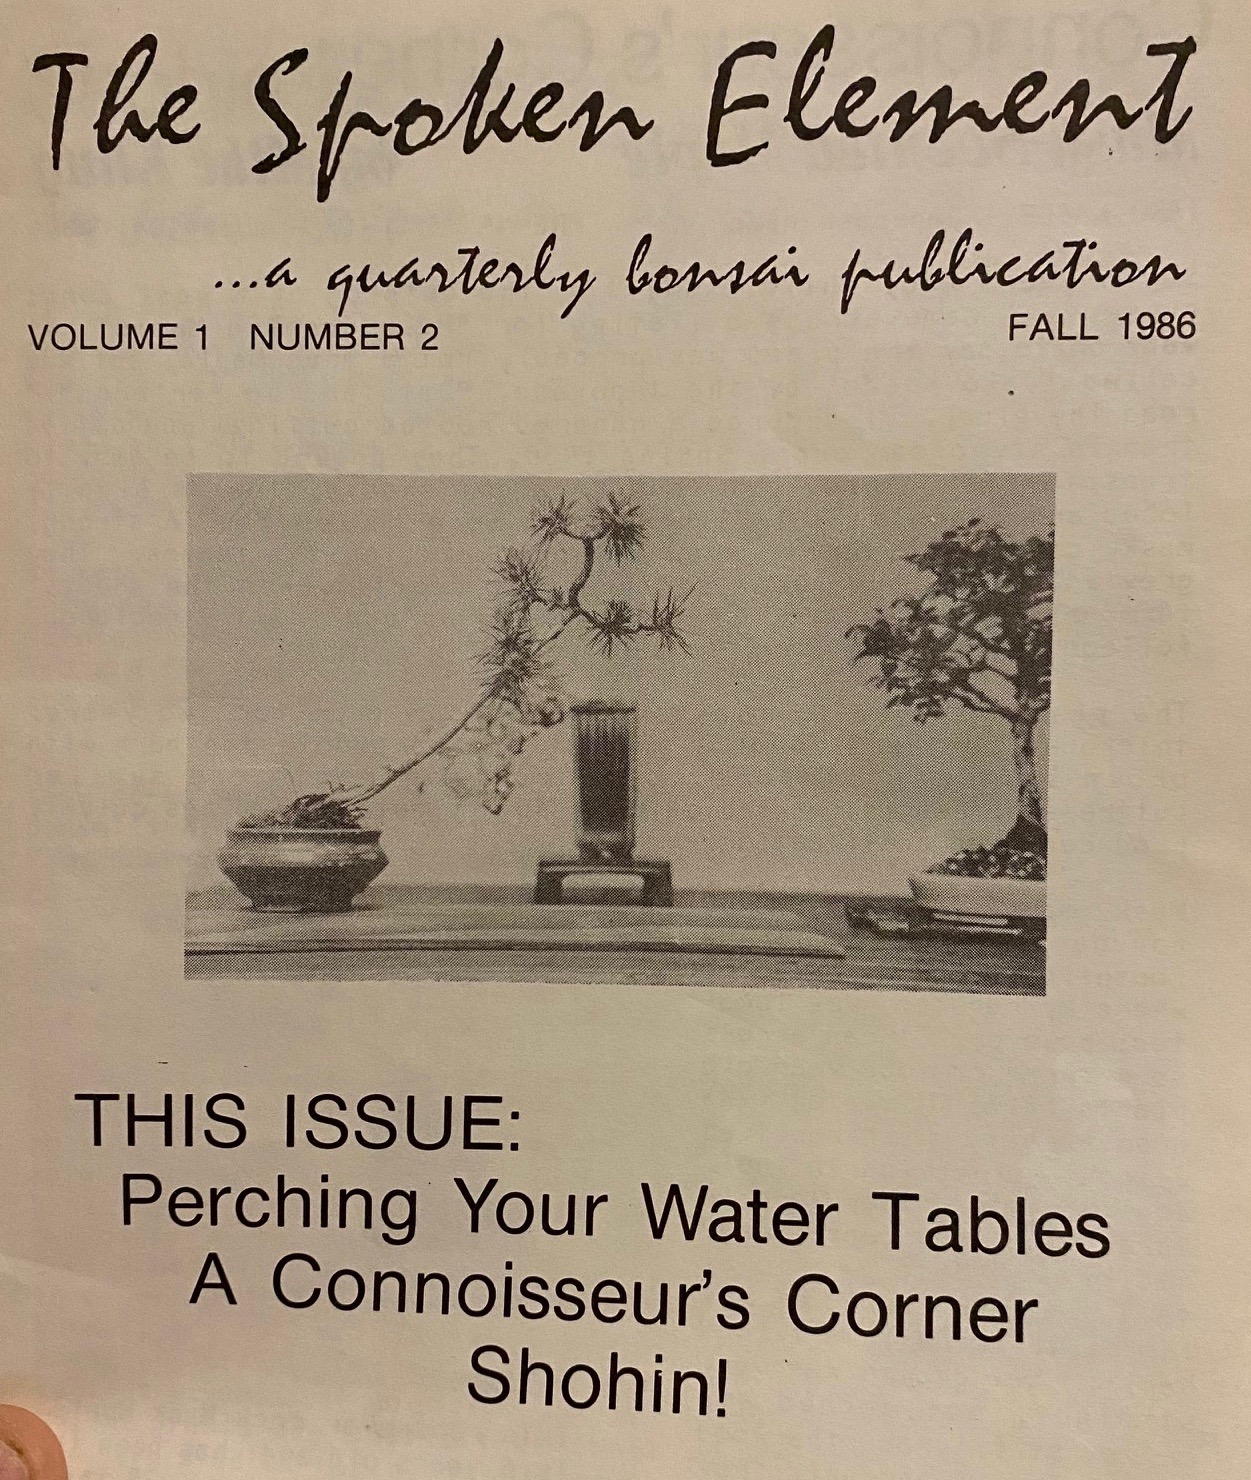 The Spoken Element, Fall 1986